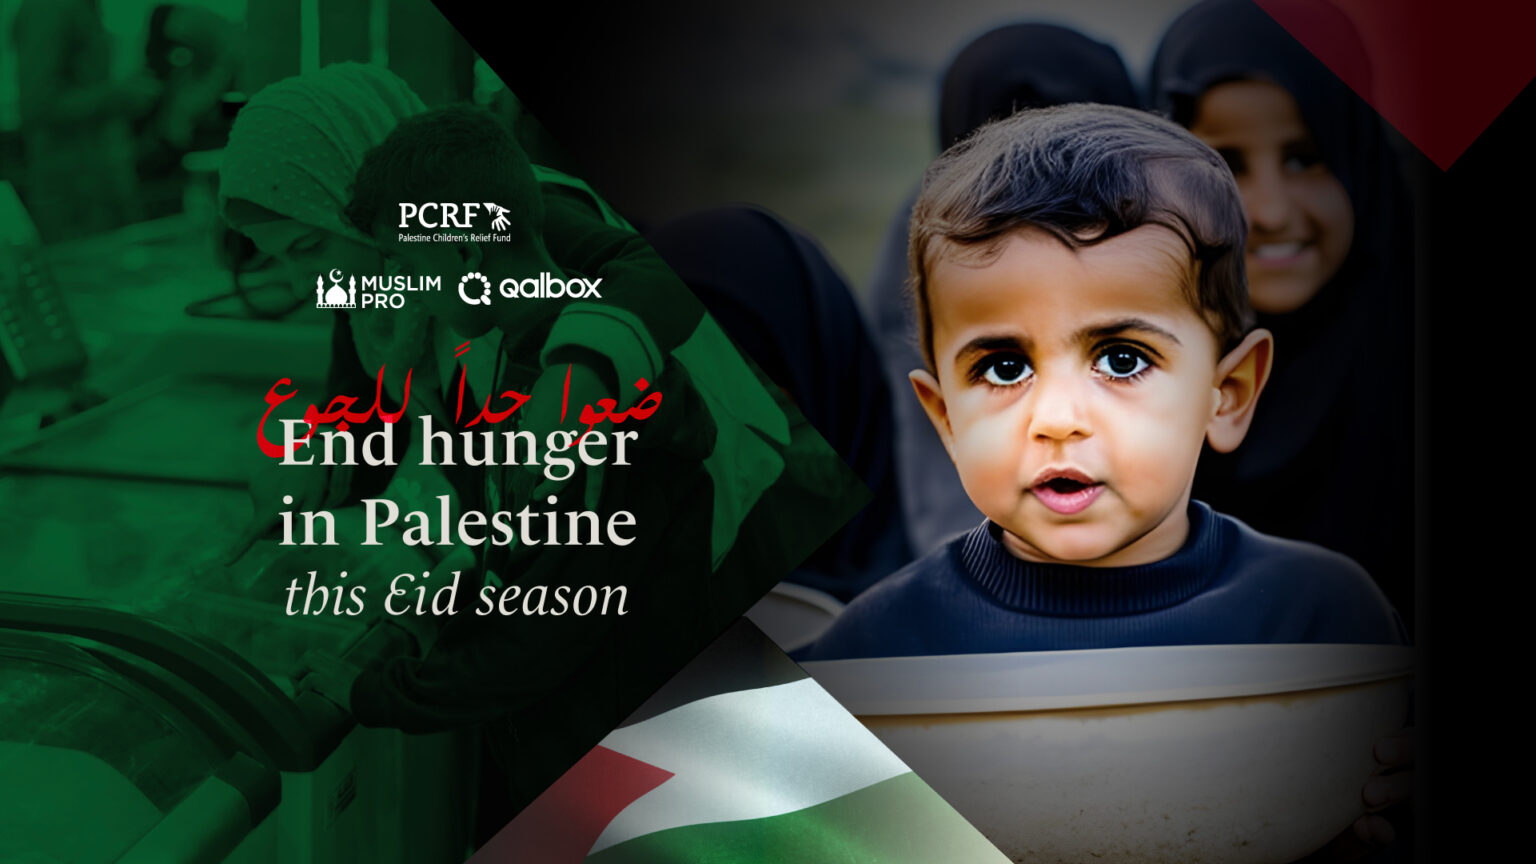 Muslim Pro-Qalbox and the Palestine Children's Relief Fund (PCRF) provide aid in Gaza for Eid Al-Adha